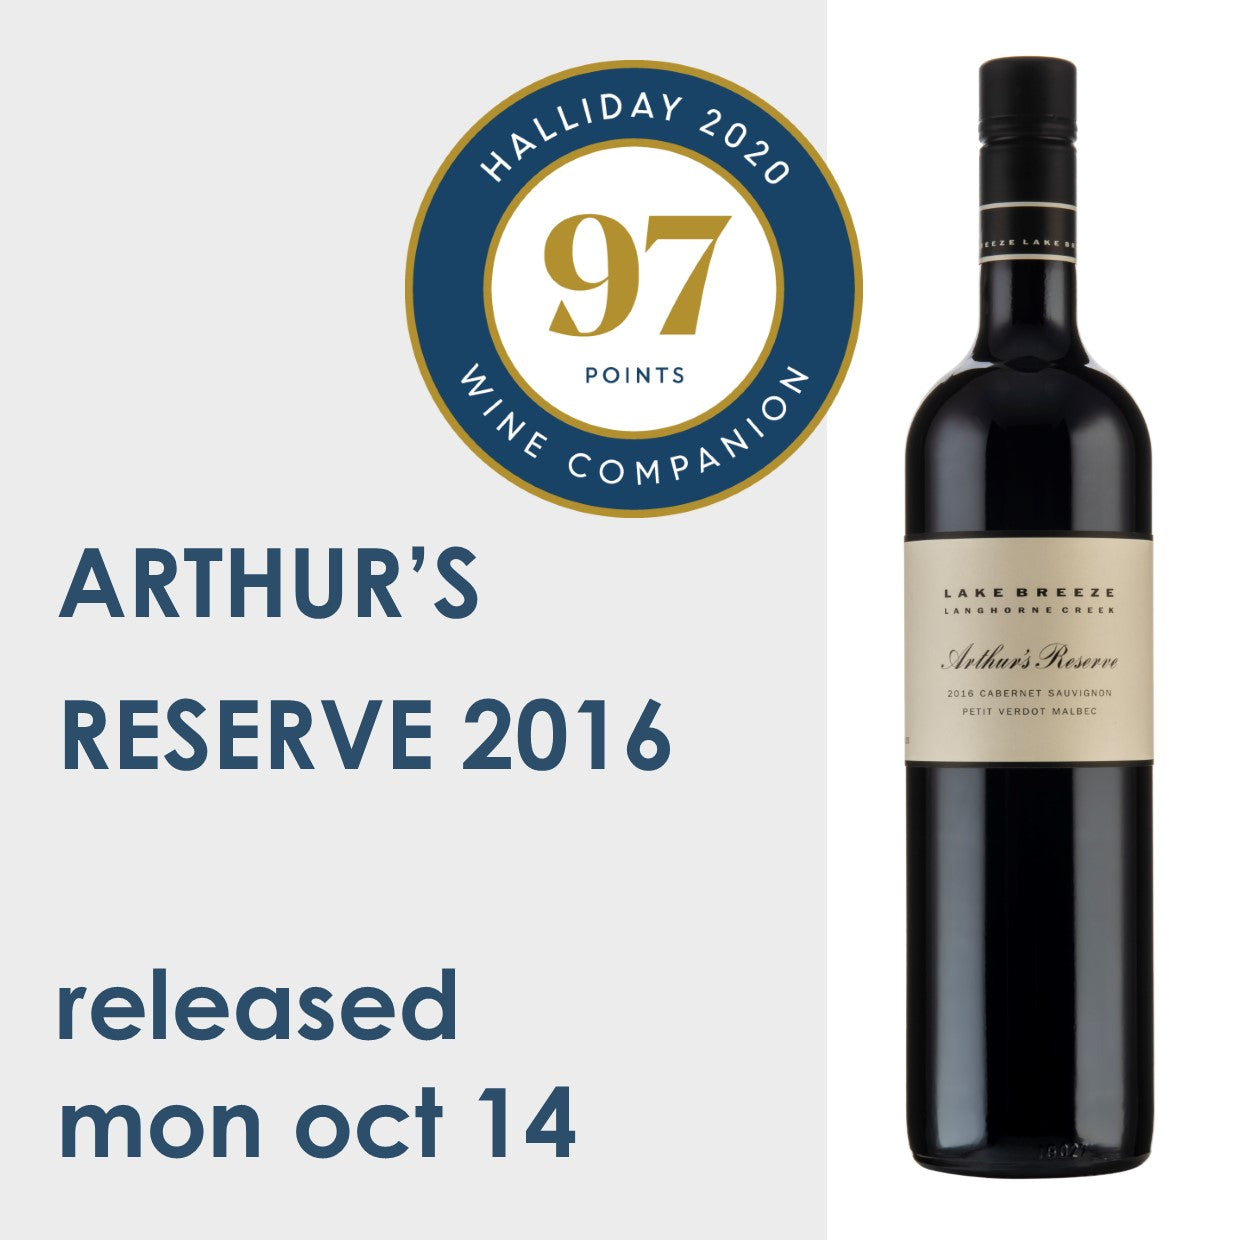 Arthur's Reserve - released Mon, Oct 14